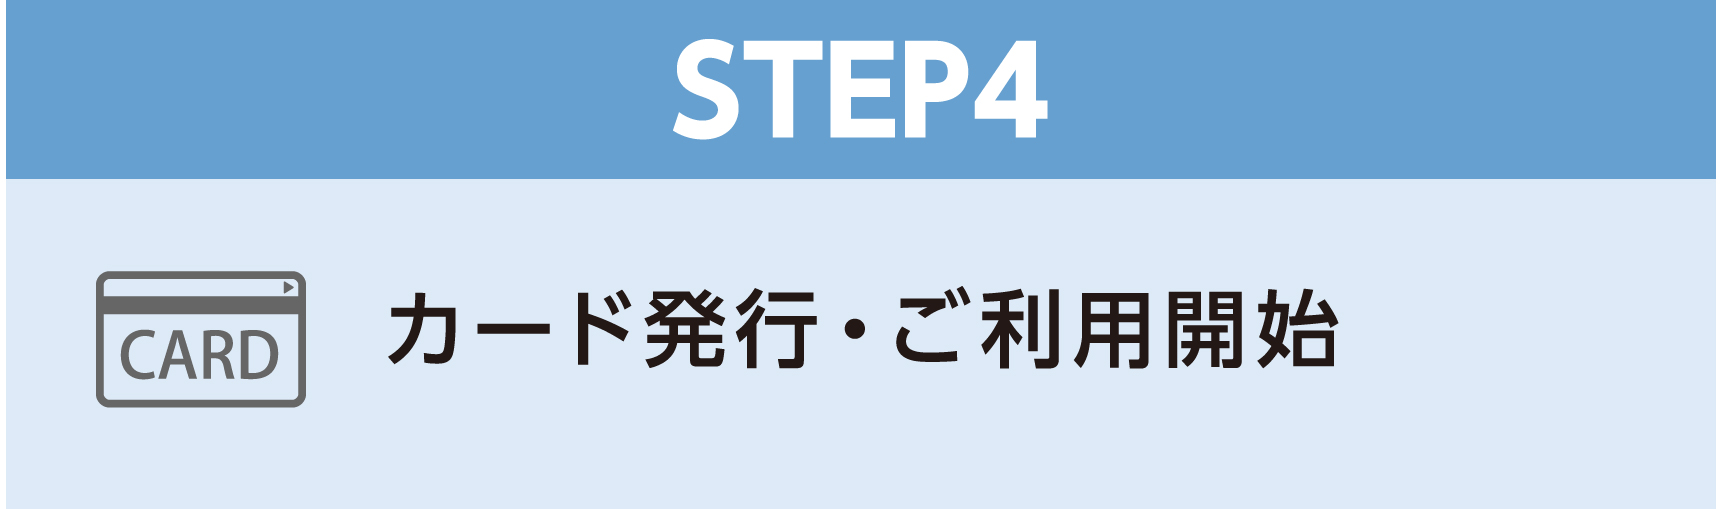 STEP4 カード発行・ご利用開始